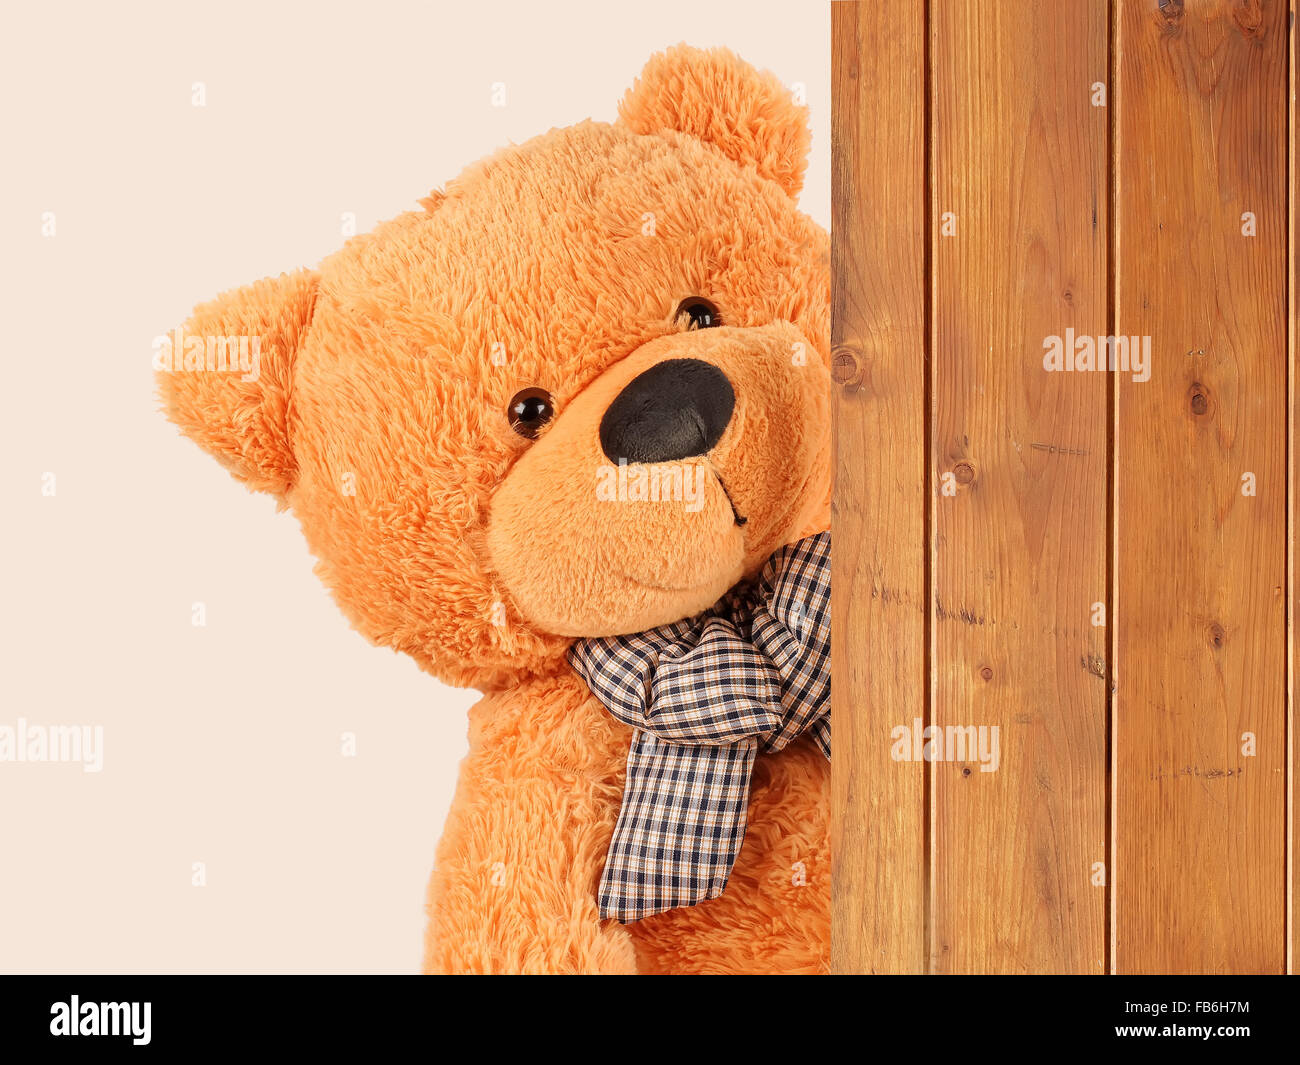 fluffy plush teddy bear over-side wooden board Stock Photo